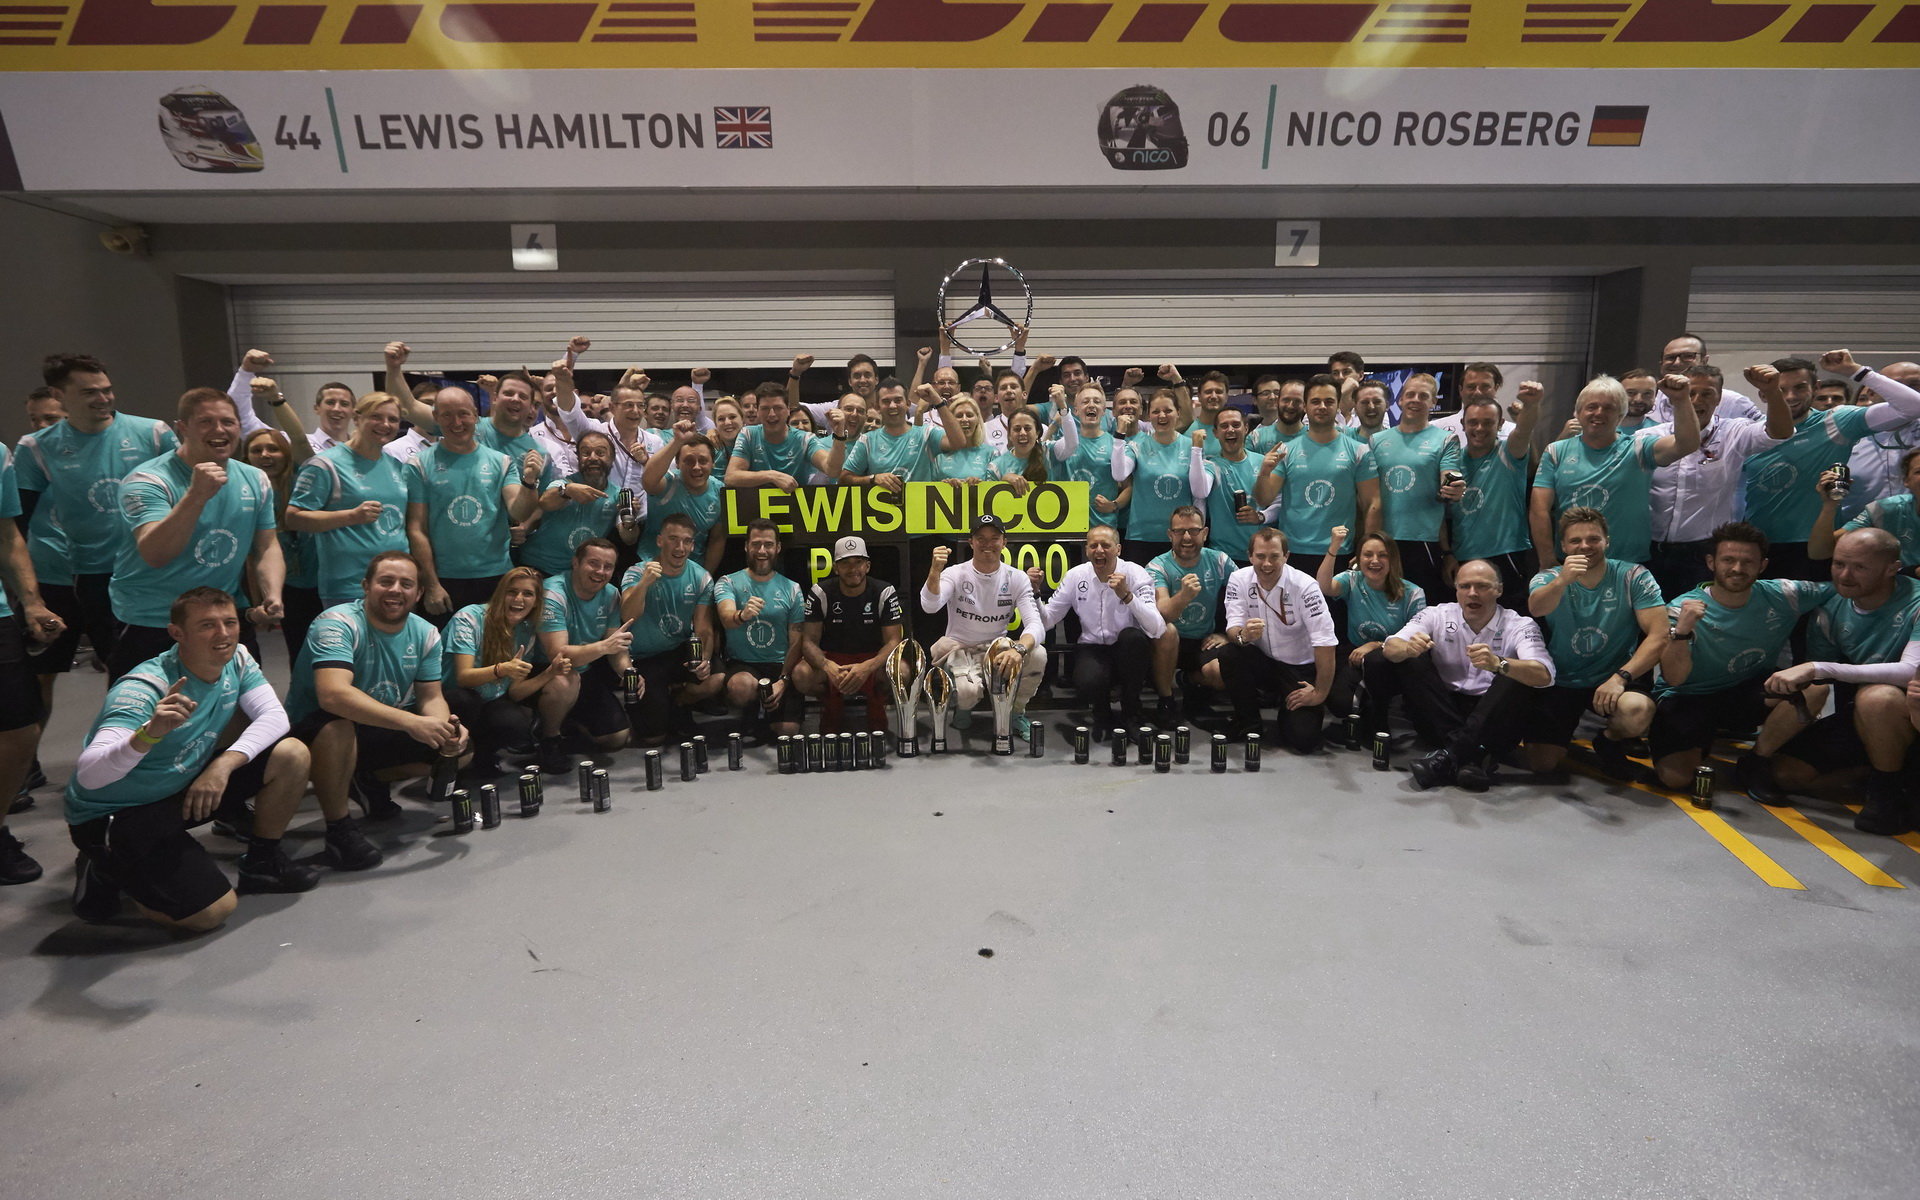 Hromadná fotografie týmu Mercedes po úspěšném víkendu v Singapuru